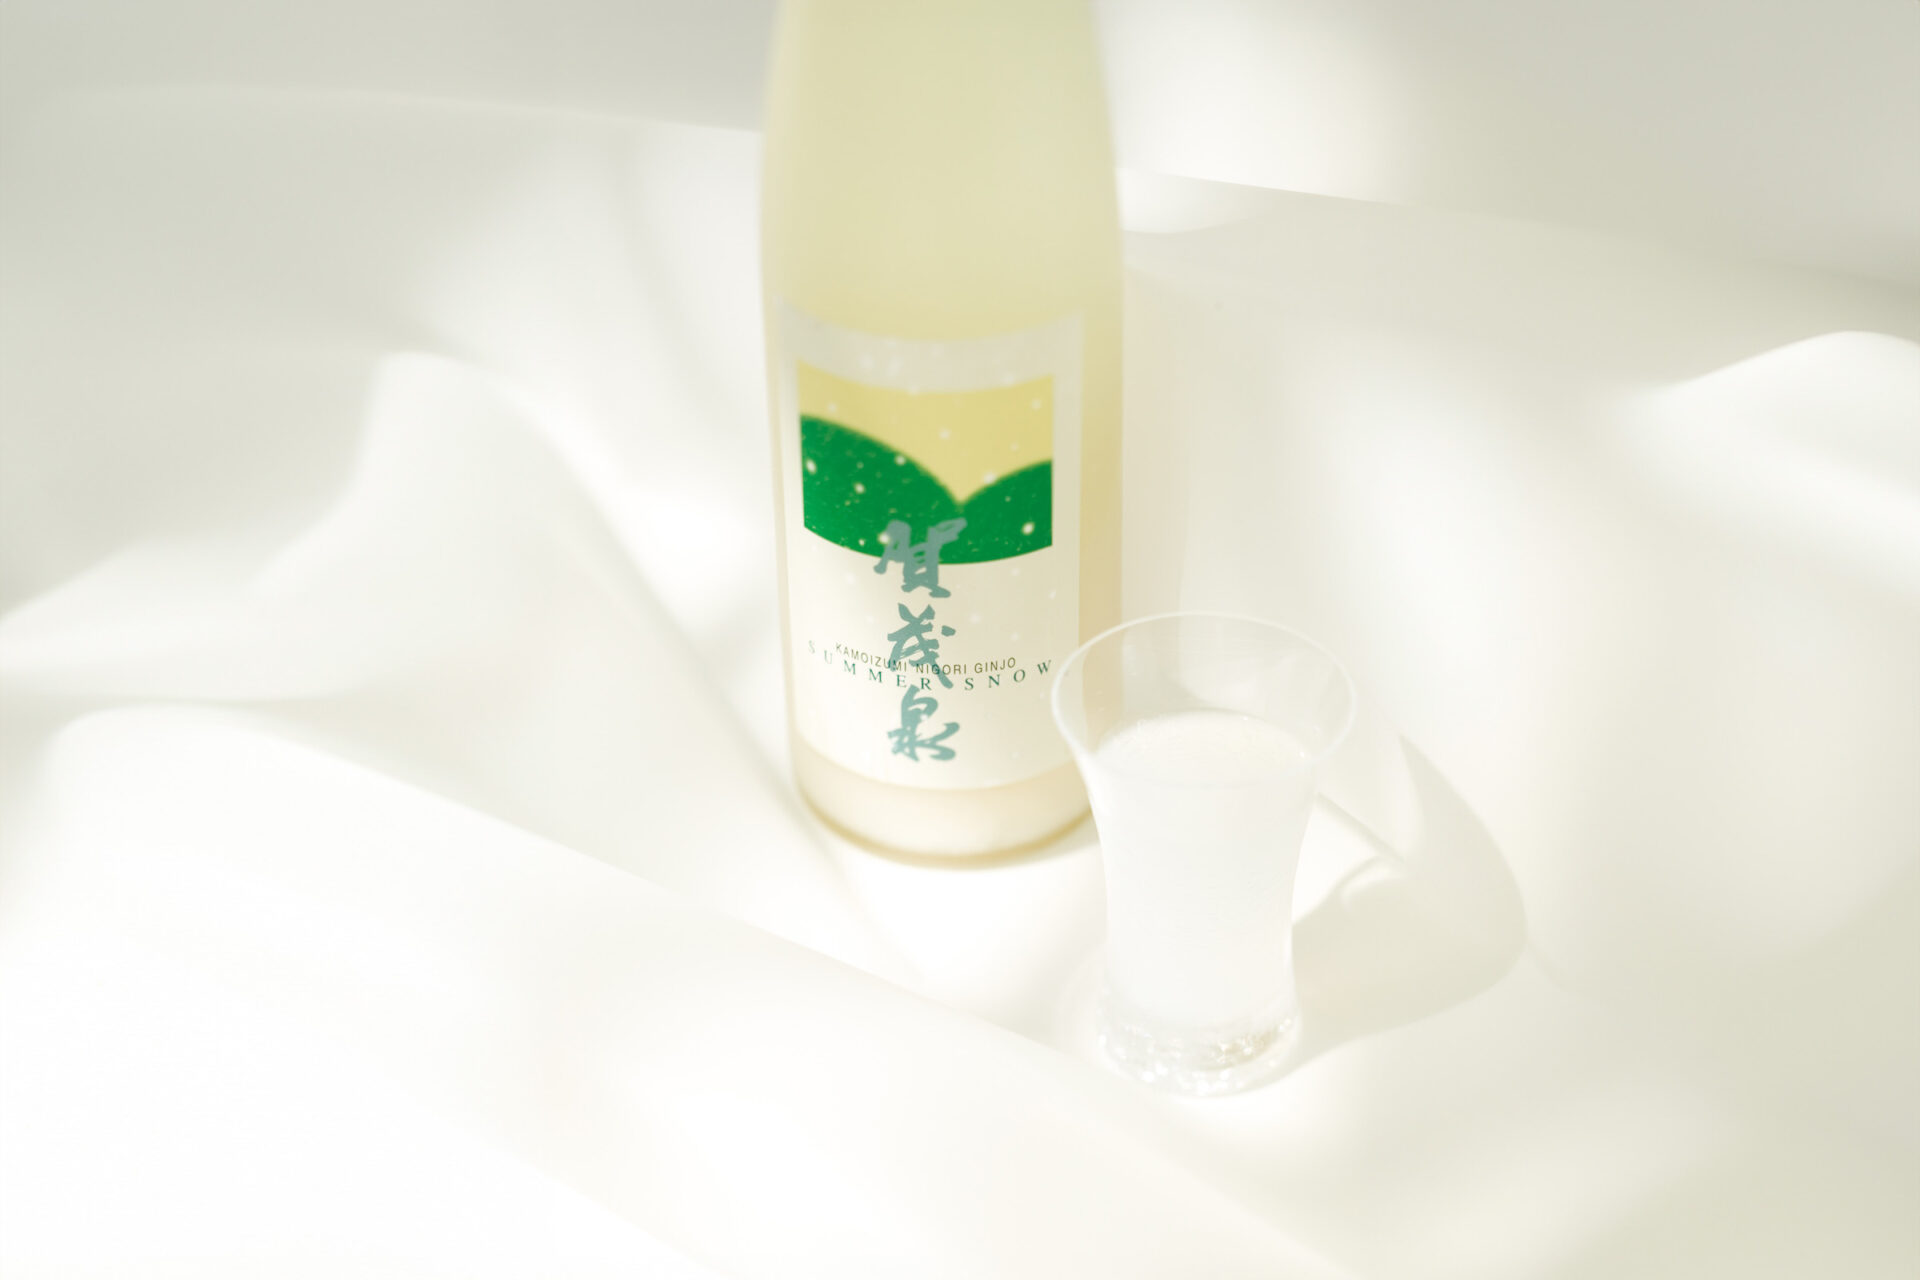 Kamoizumi “Nigori Ginjo” bottle